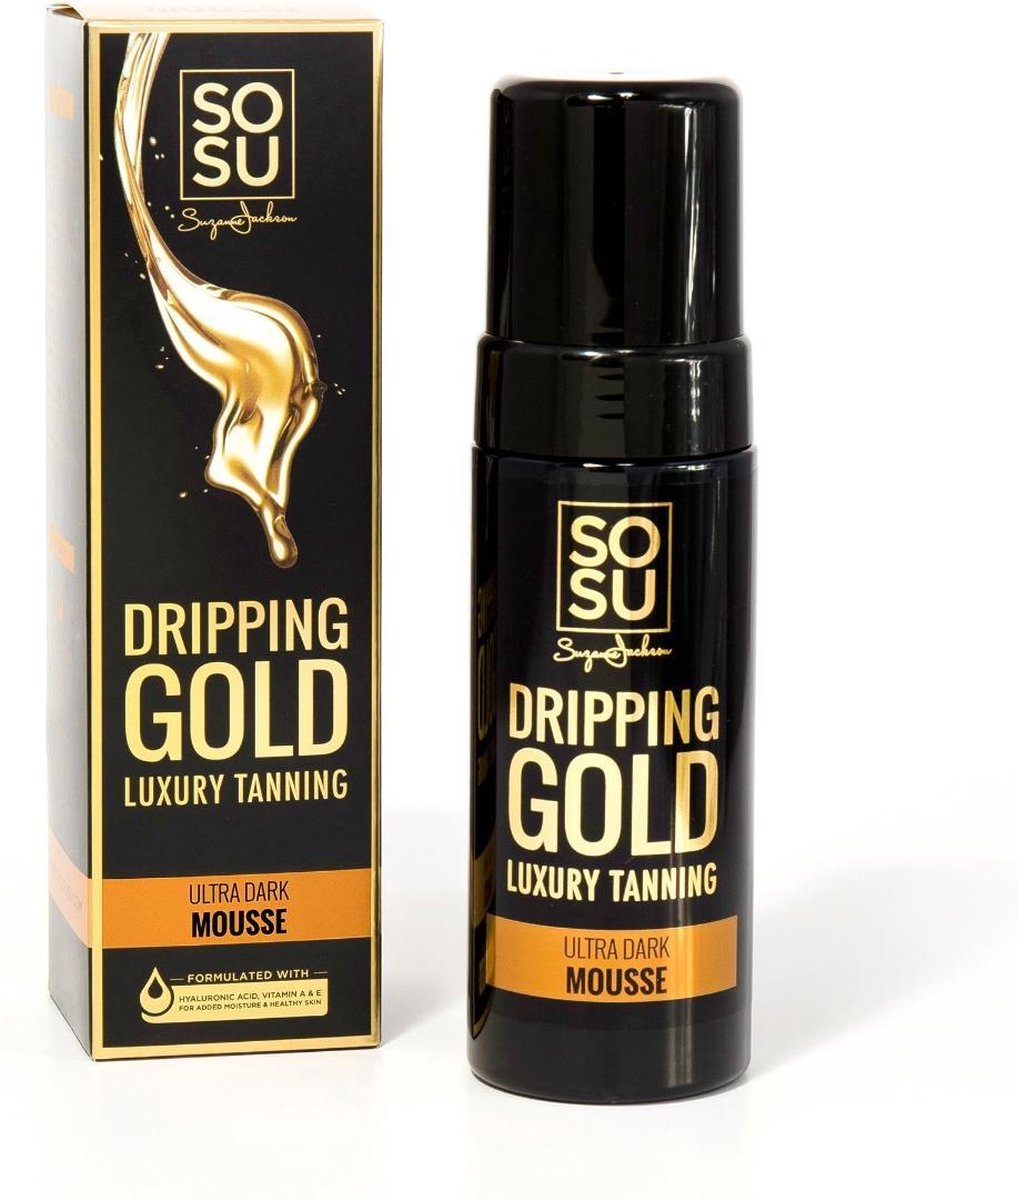 SOSU Dripping Gold Luxury Tanning Mousse Ultra Dark